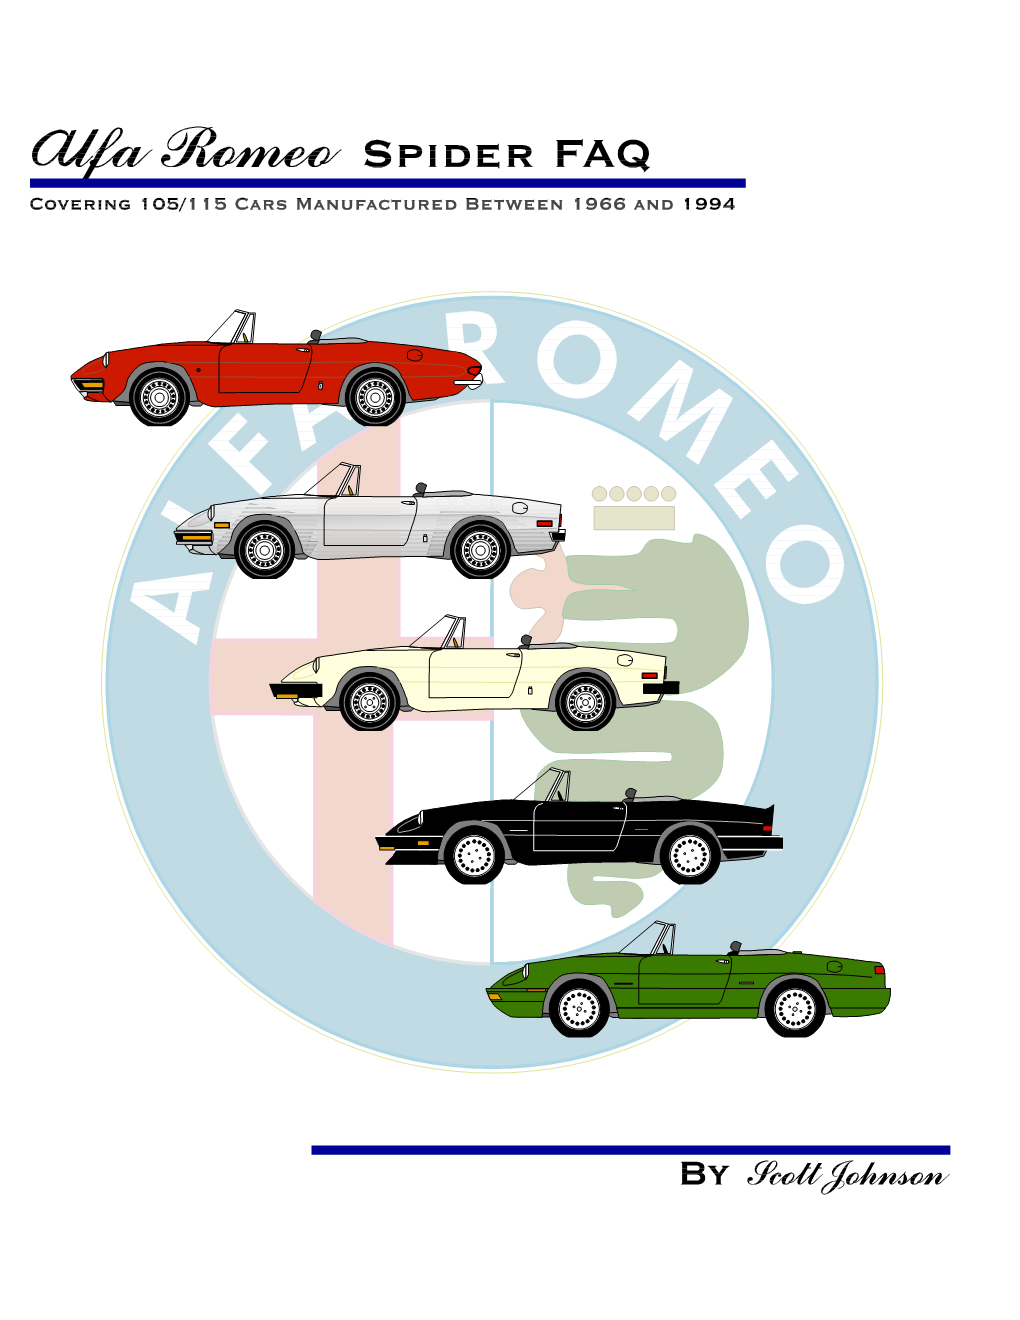 ALFA ROMEO 105/115 SPIDER FAQ (Covering Cars Built from 1966 Through 1994)